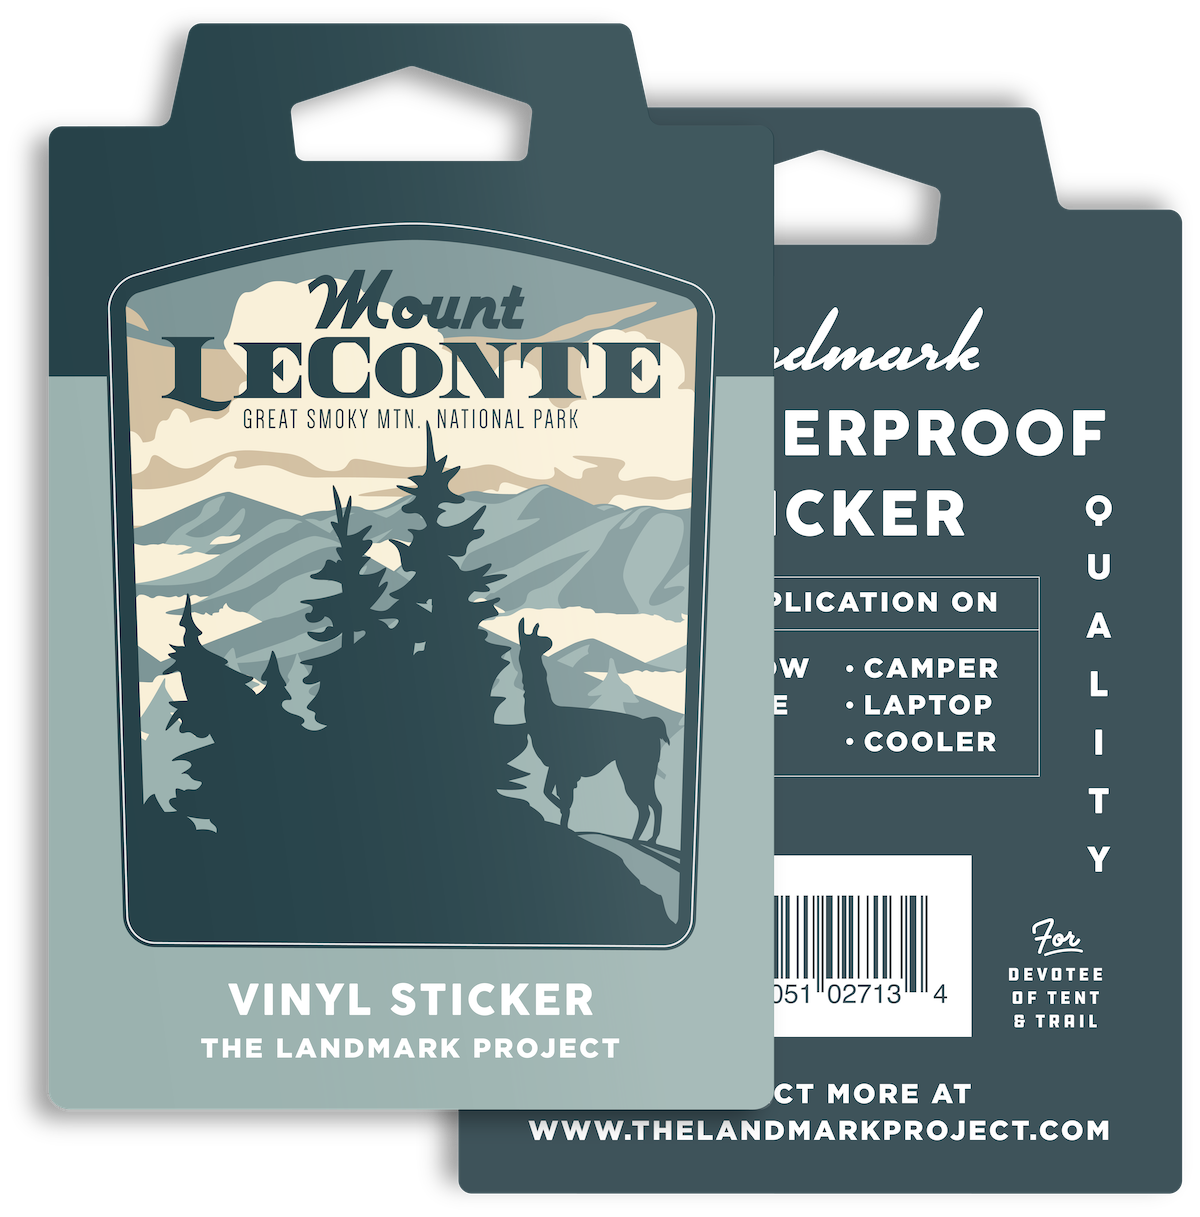 Mount LeConte Sticker